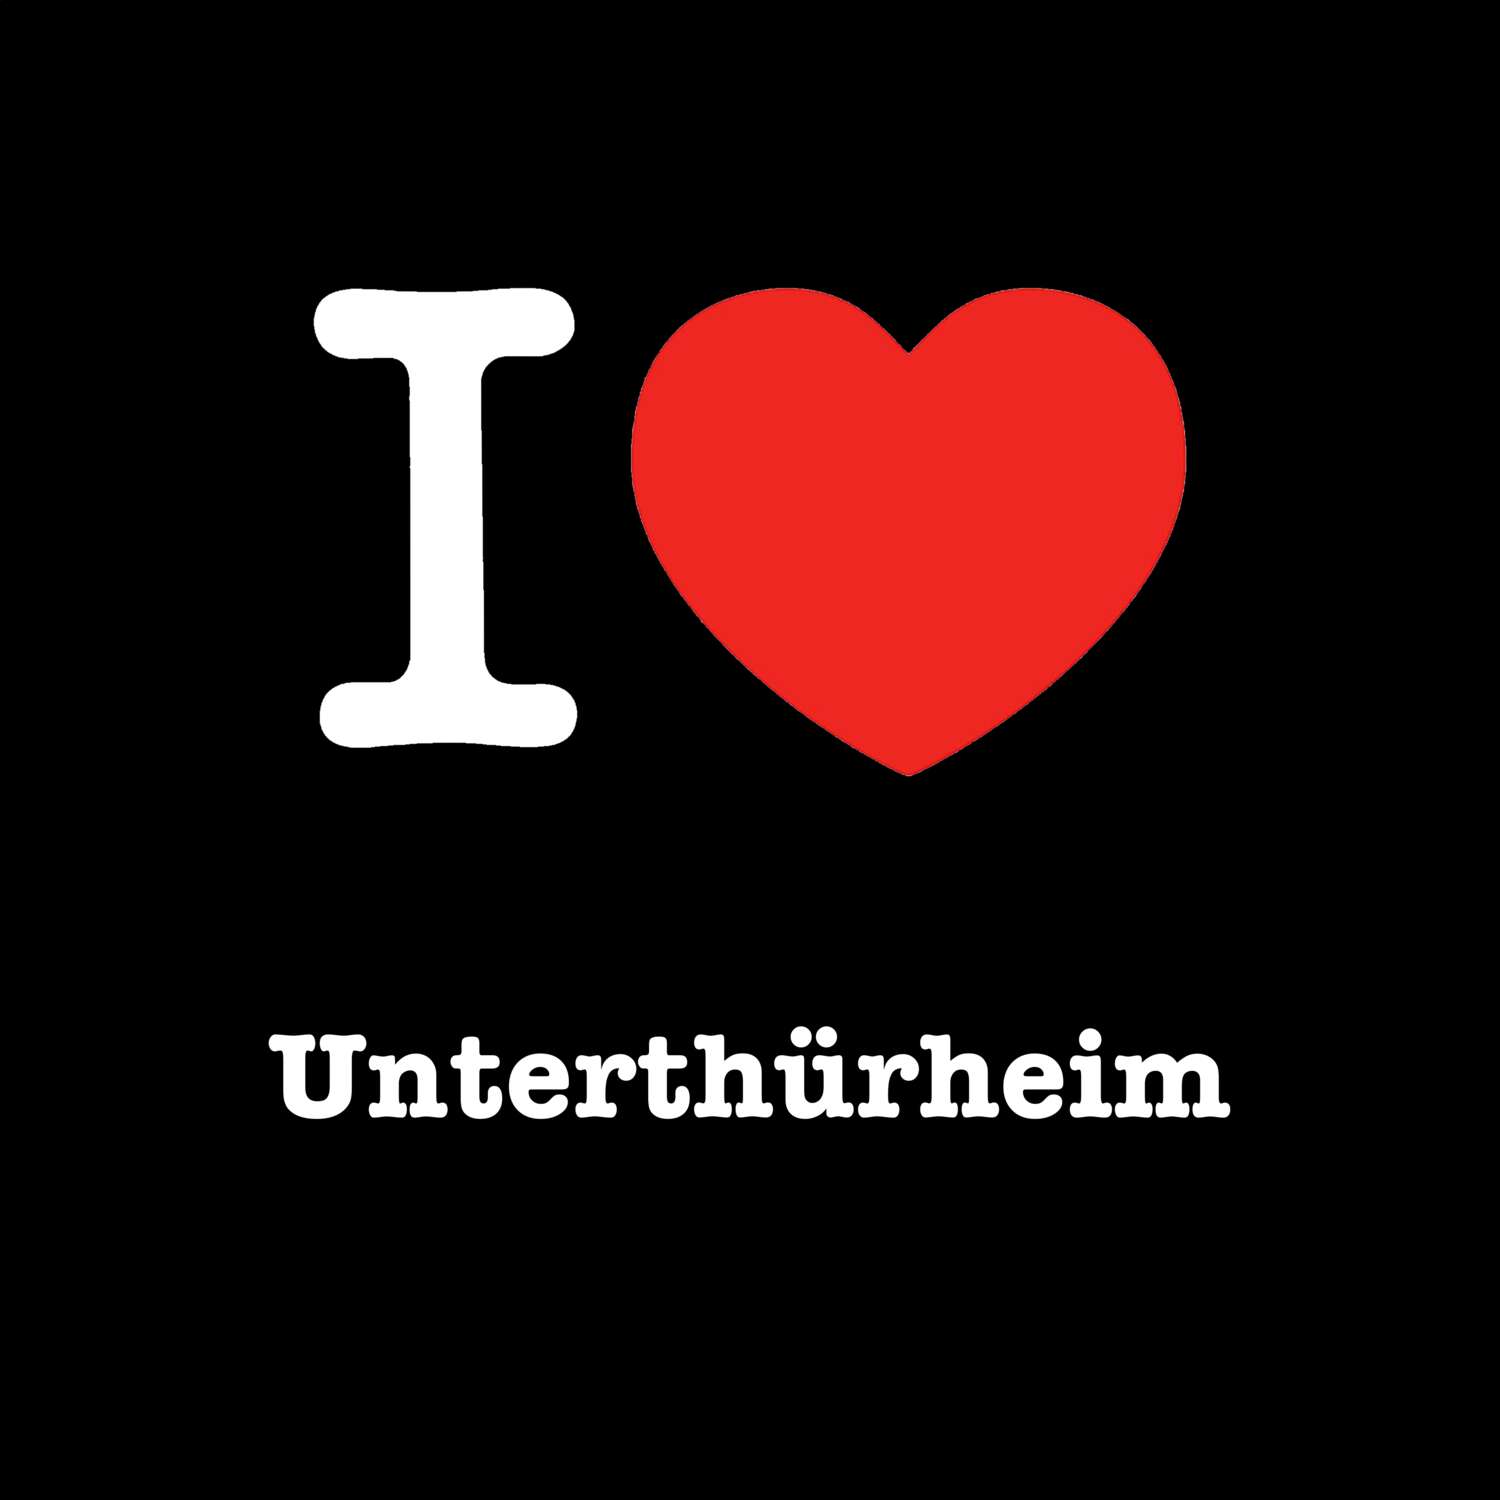 Unterthürheim T-Shirt »I love«